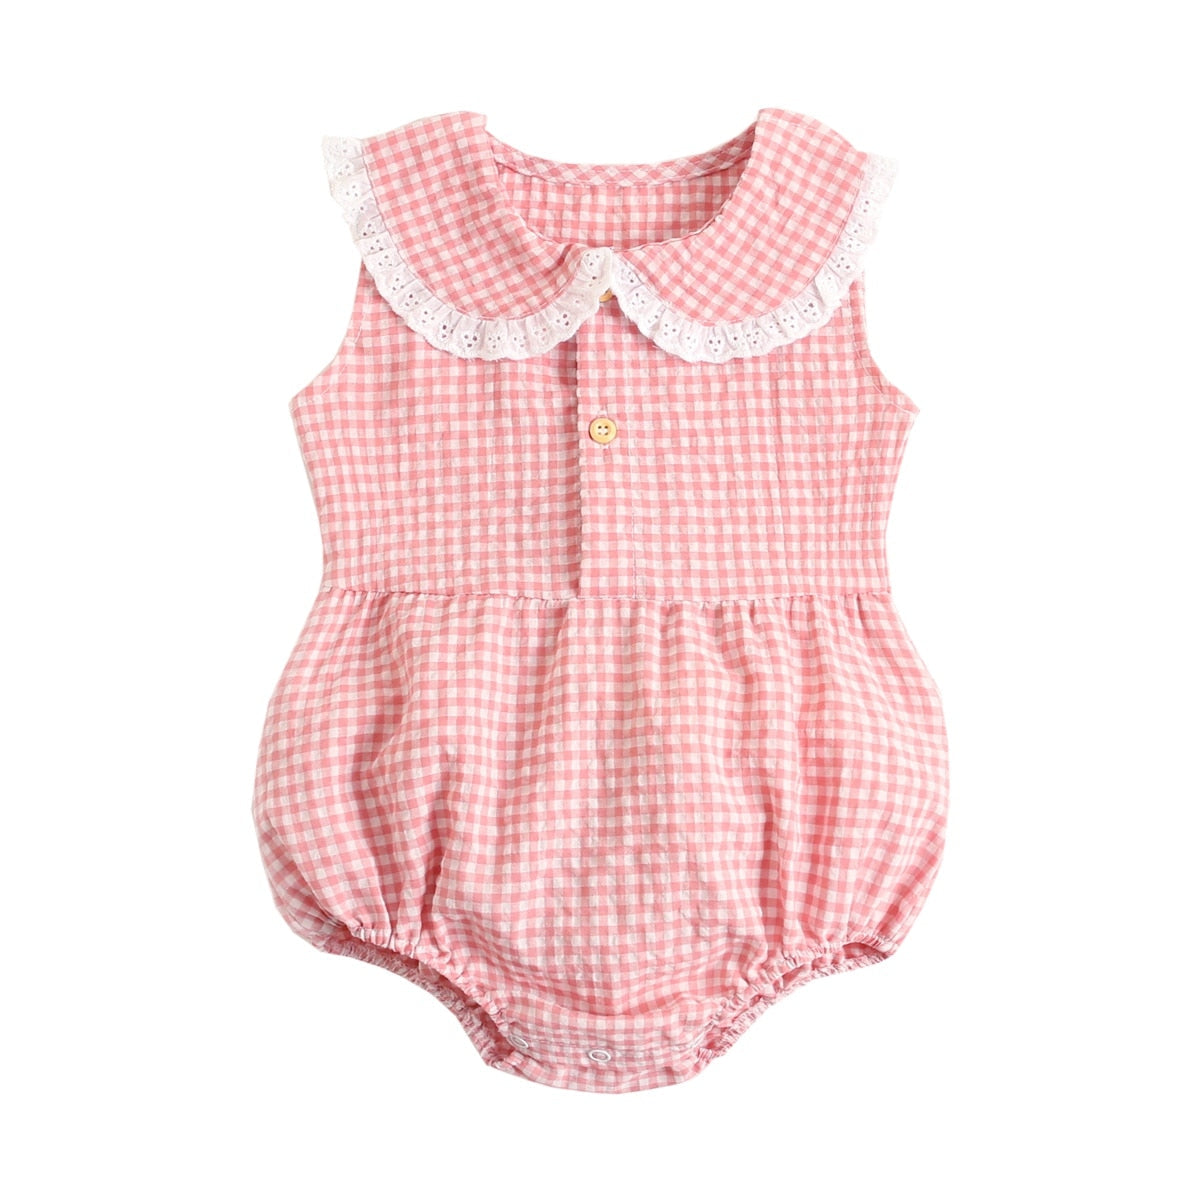 Baby Romper - Cute Plaid Newborn Baby Toddler Bodysuits